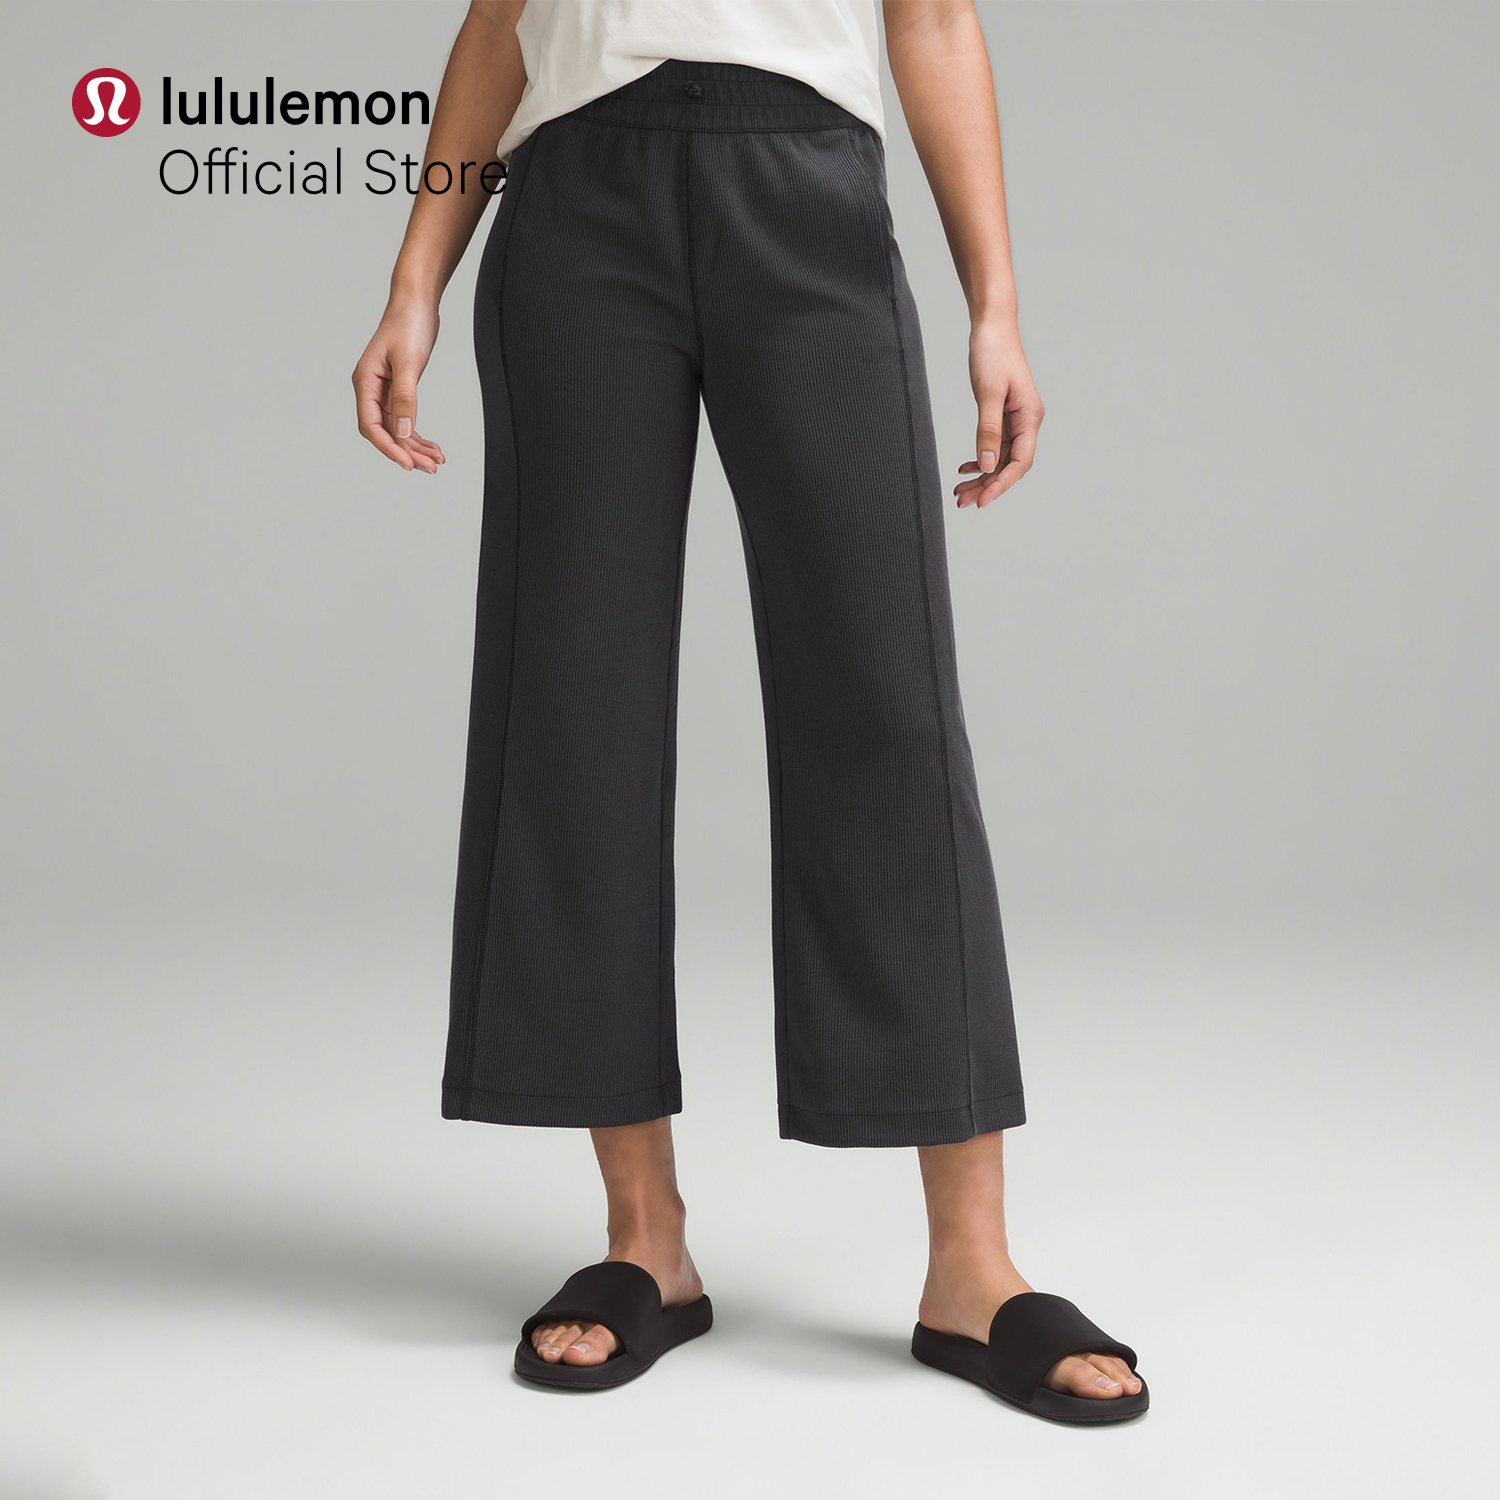 lululemon Women's Align™ Wide Leg High-Rise Pant 28 - Asia Fit - yoga pants